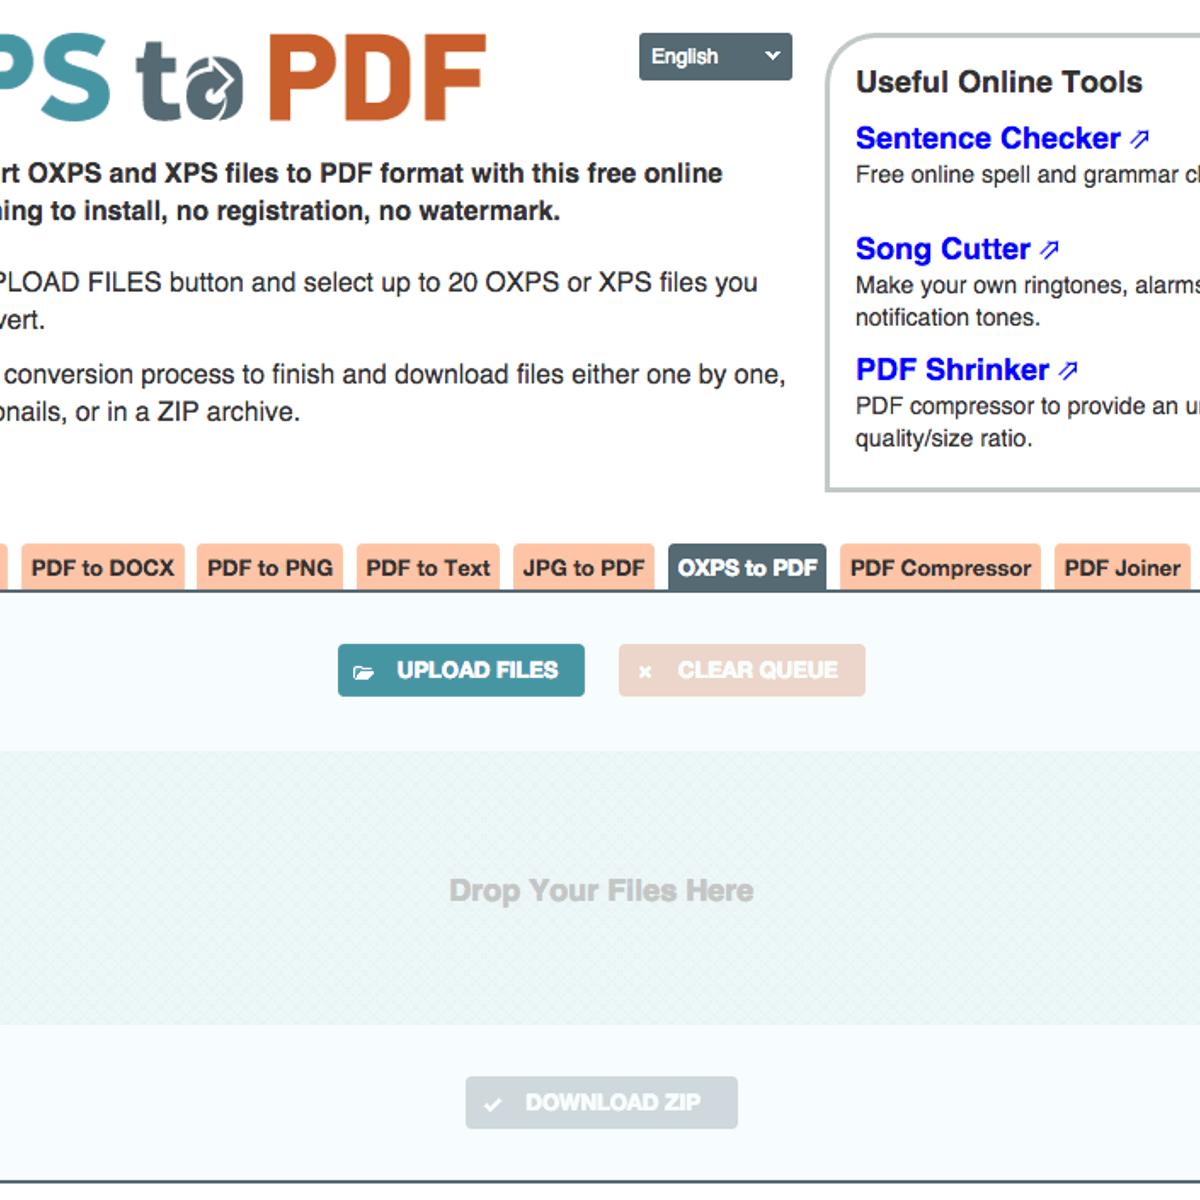 oxps file to pdf converter free download